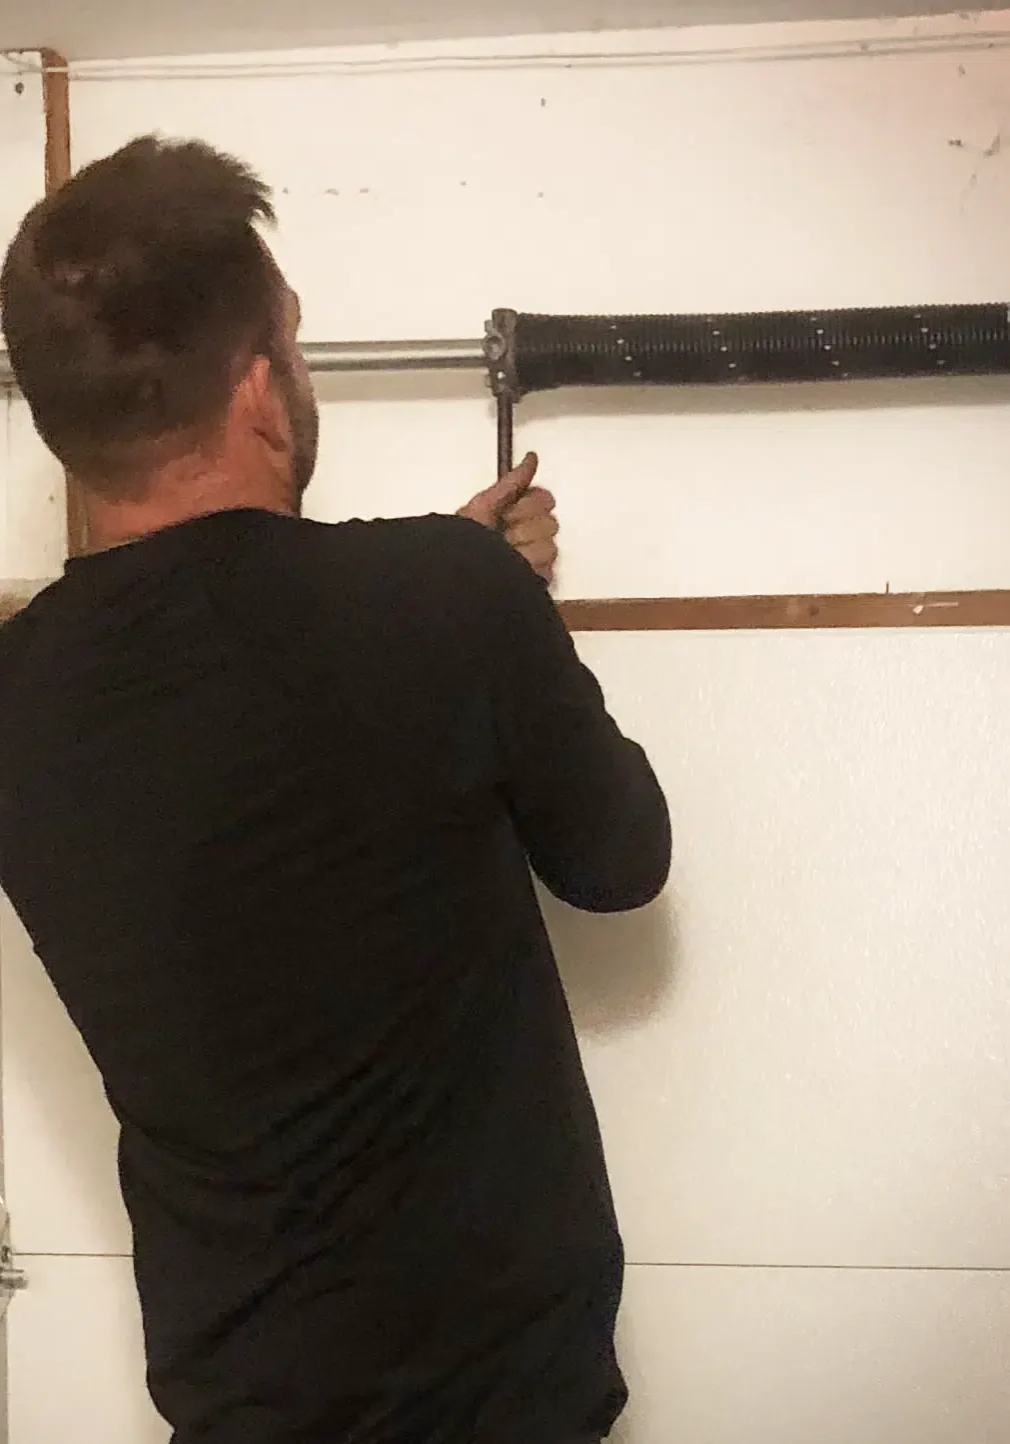 Jim Beam Repairing A Garage Door Spring